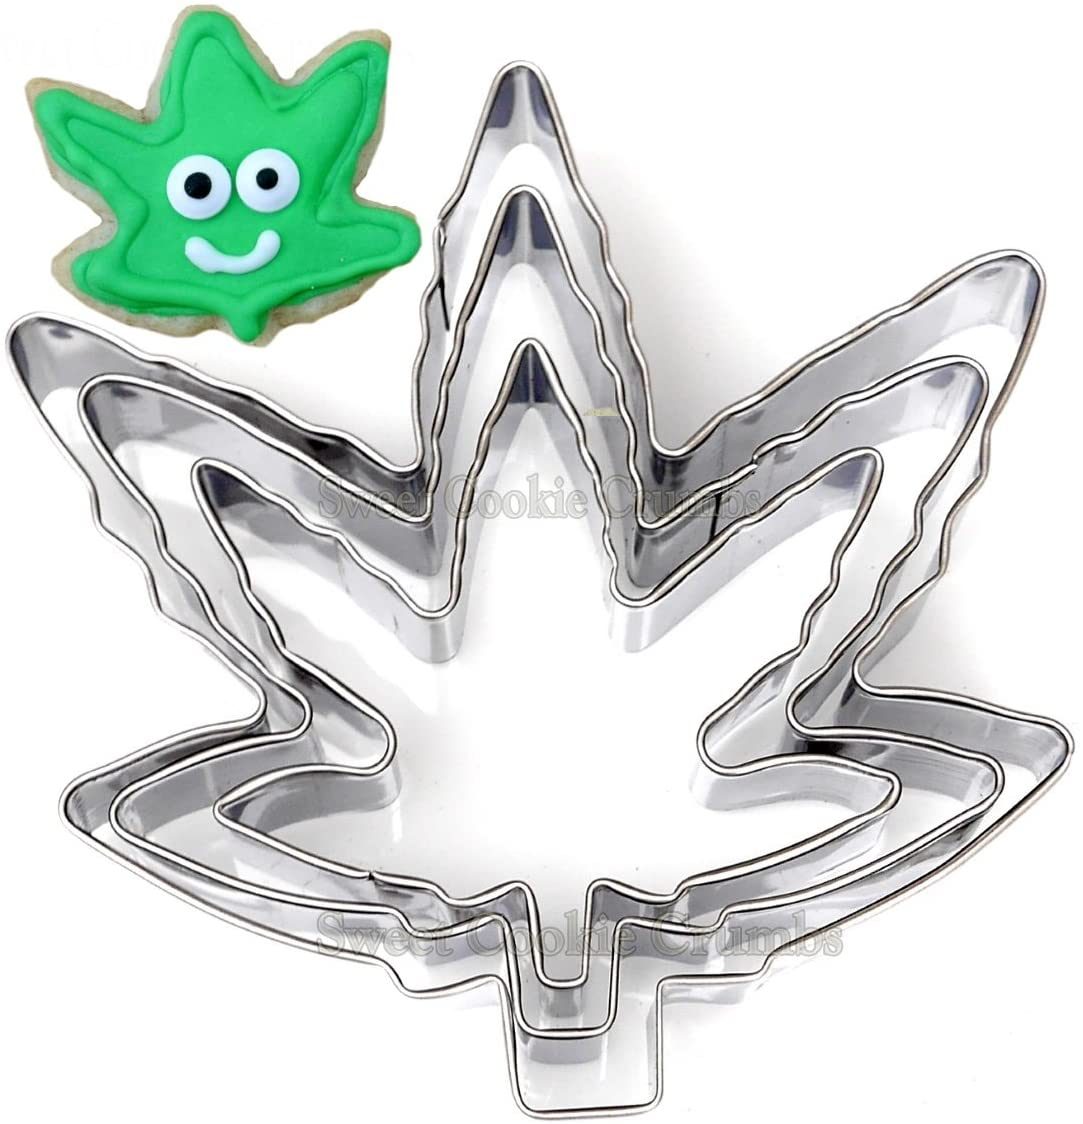 Marijuana Leaf Shaped Cookie Cutters